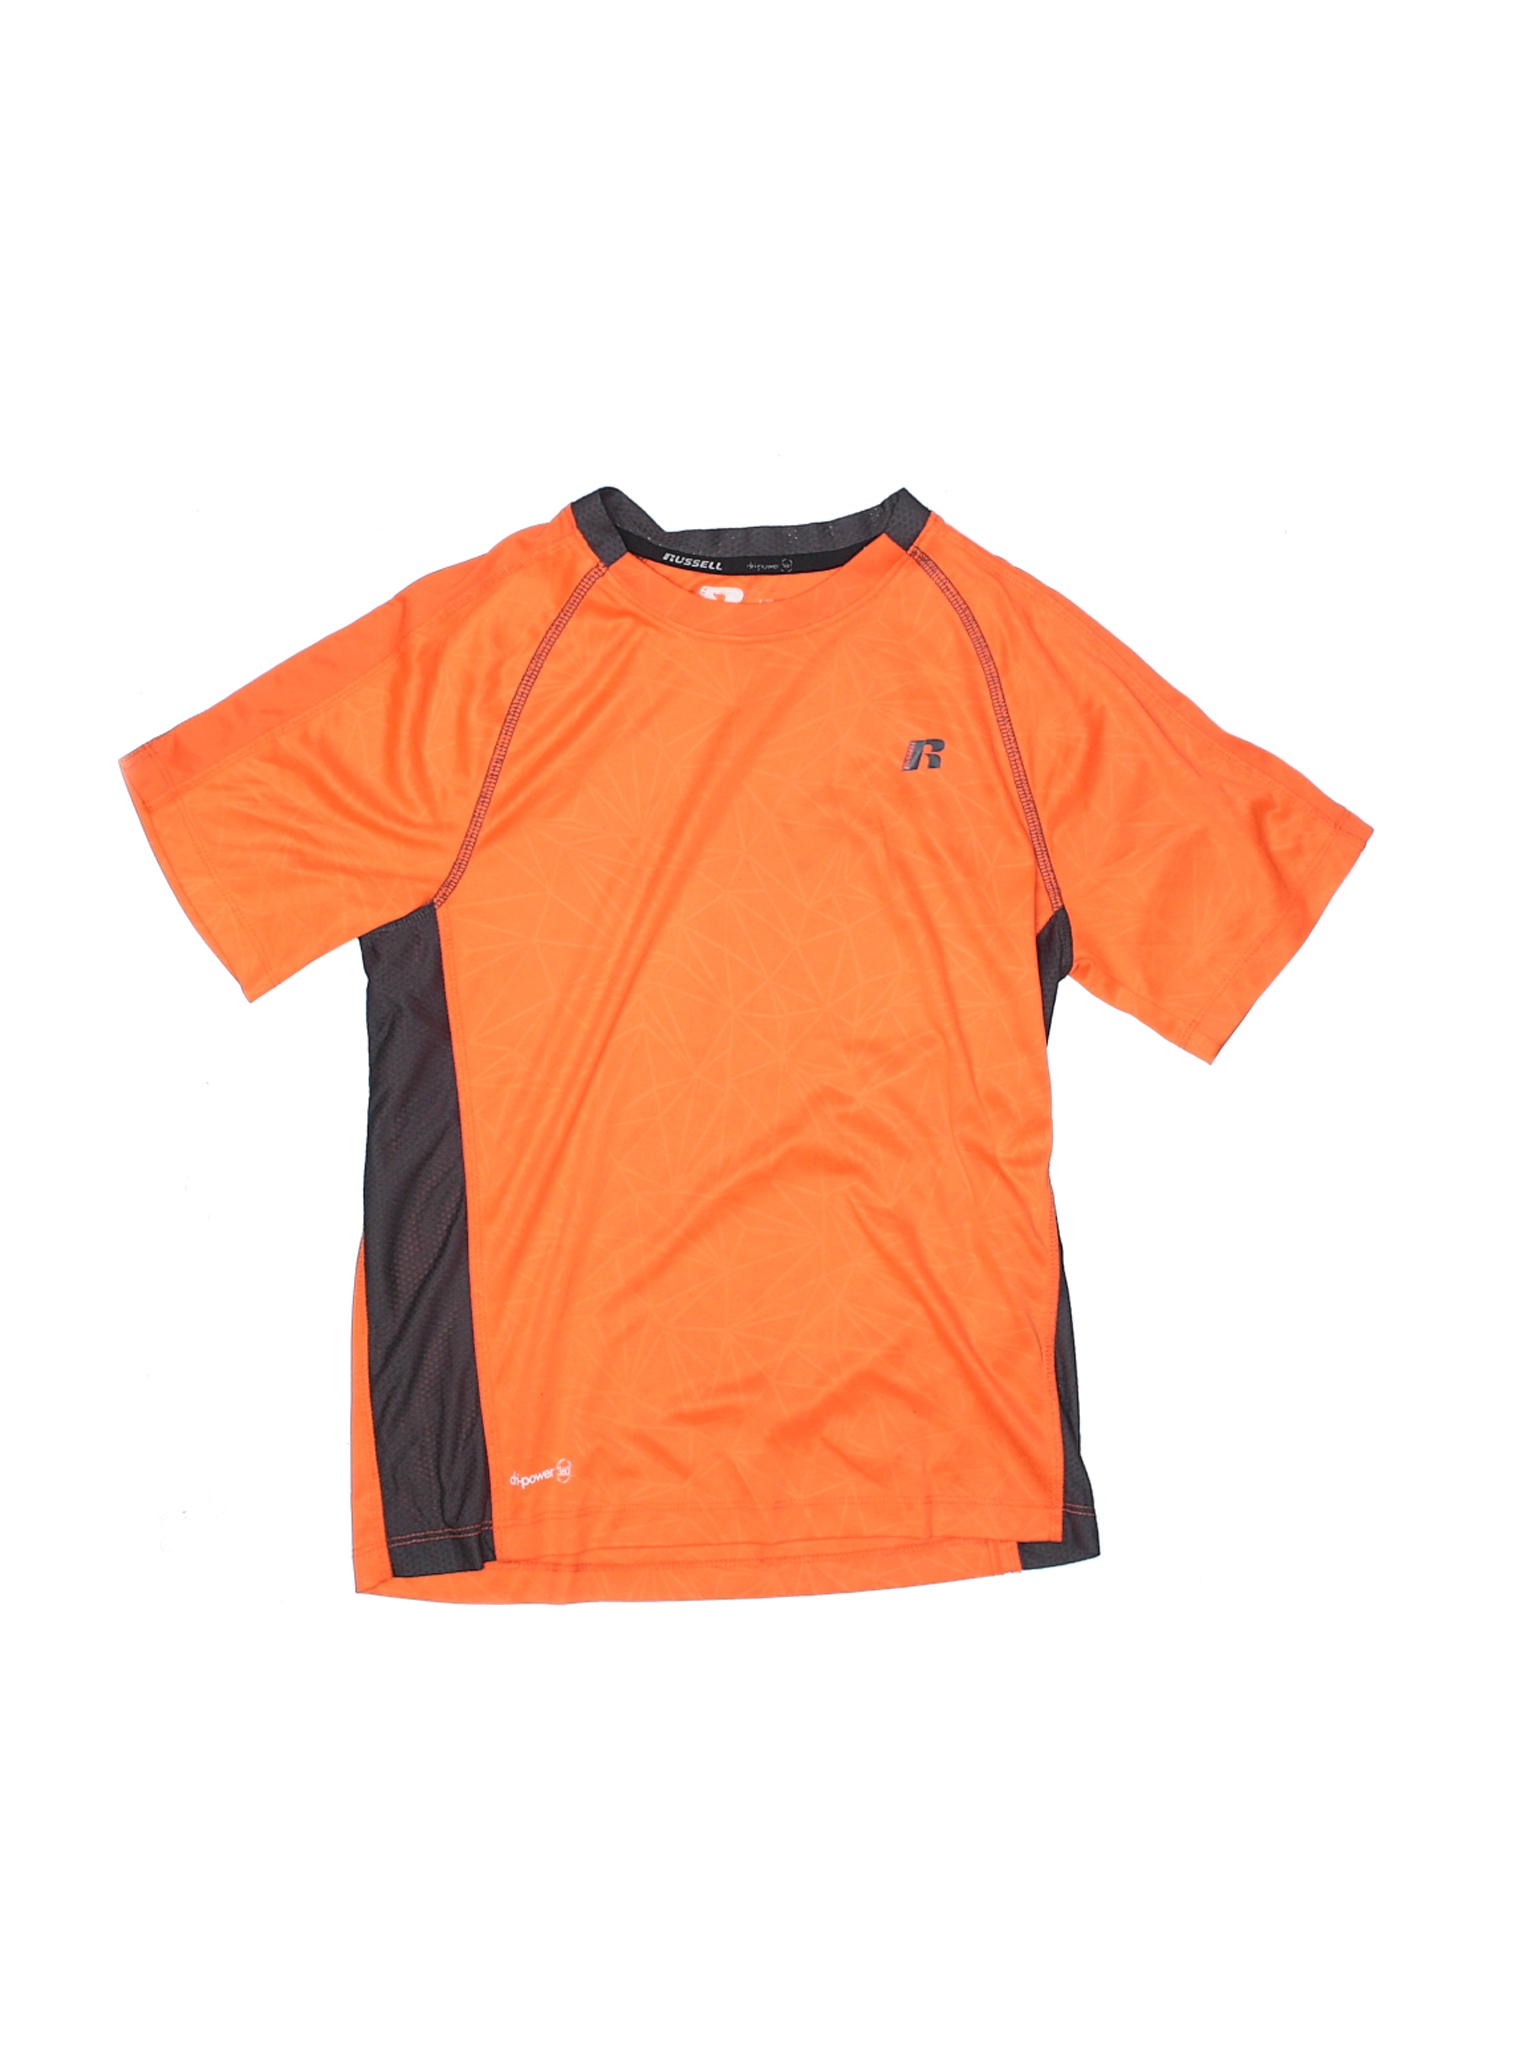 Russell Athletic Boys Orange Active T-Shirt 10 | eBay